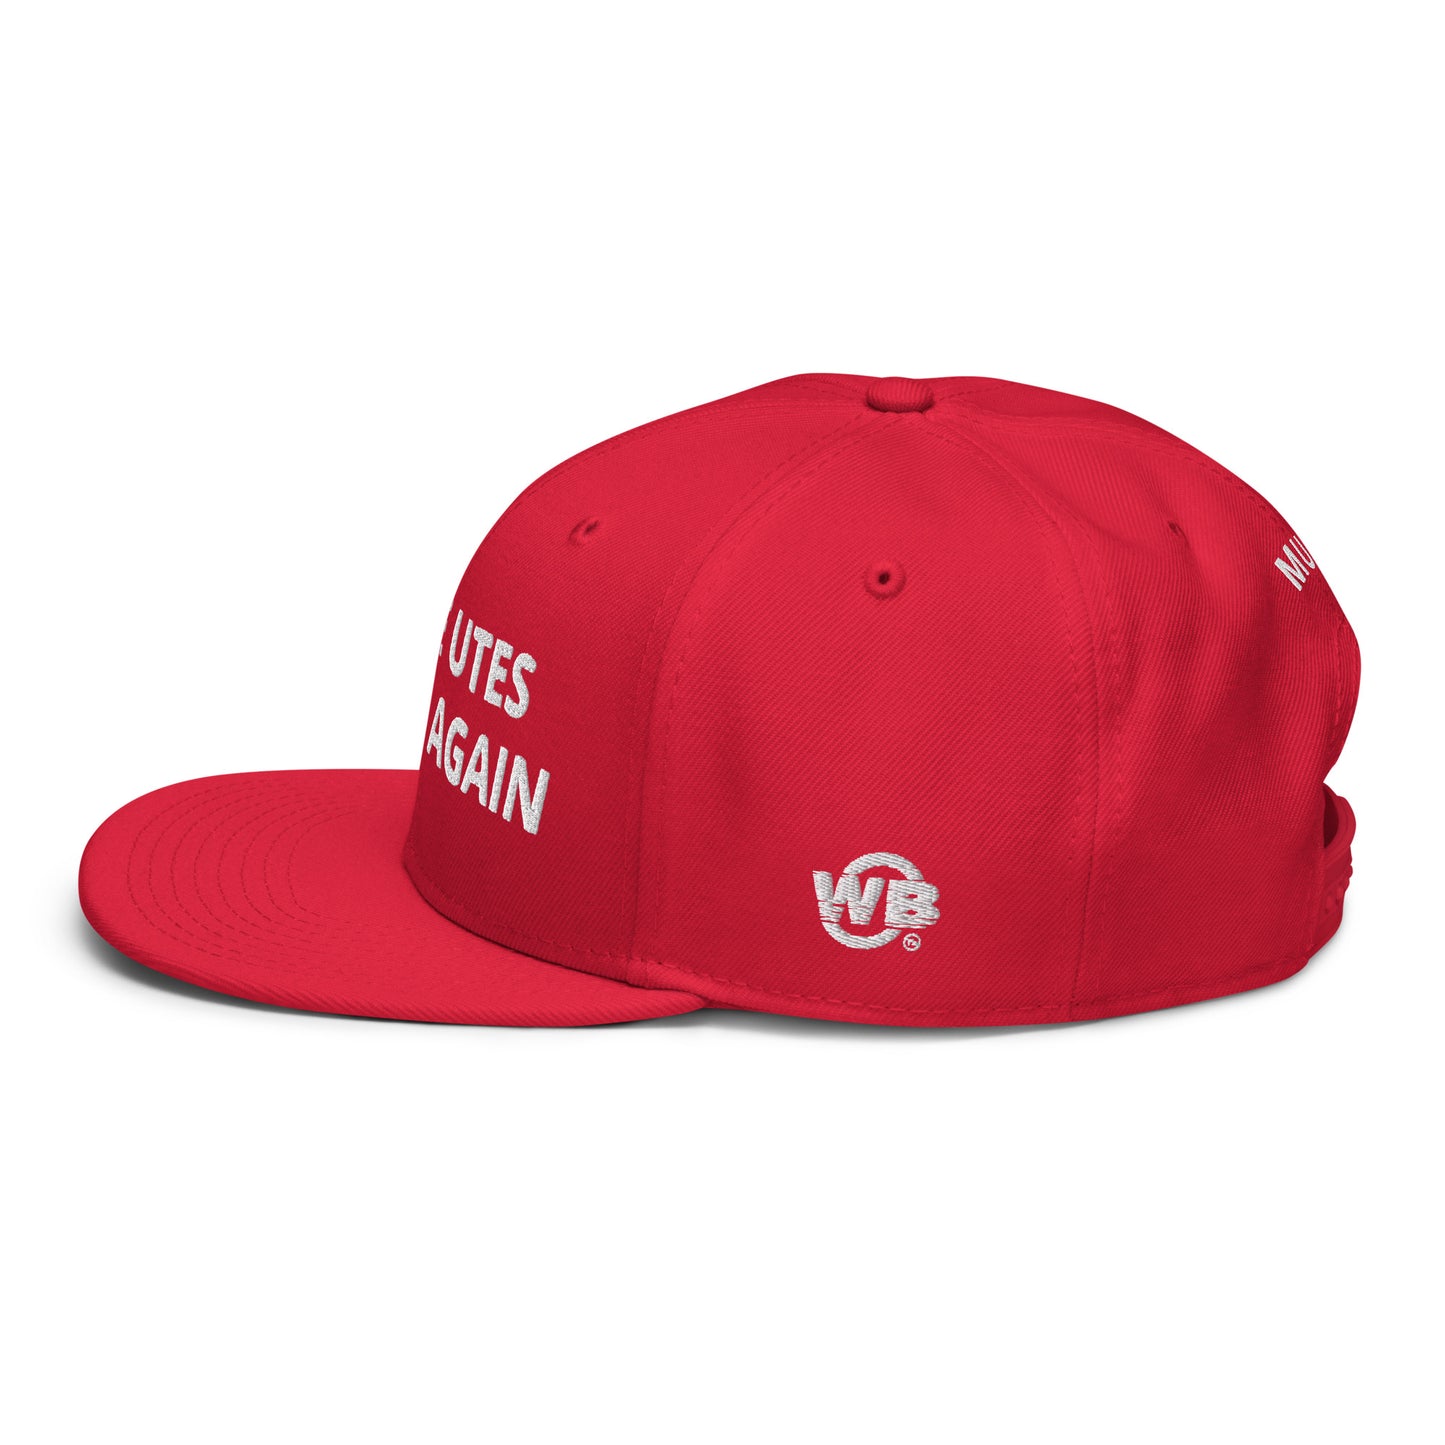 Make Utes Great Again Snapback Hat